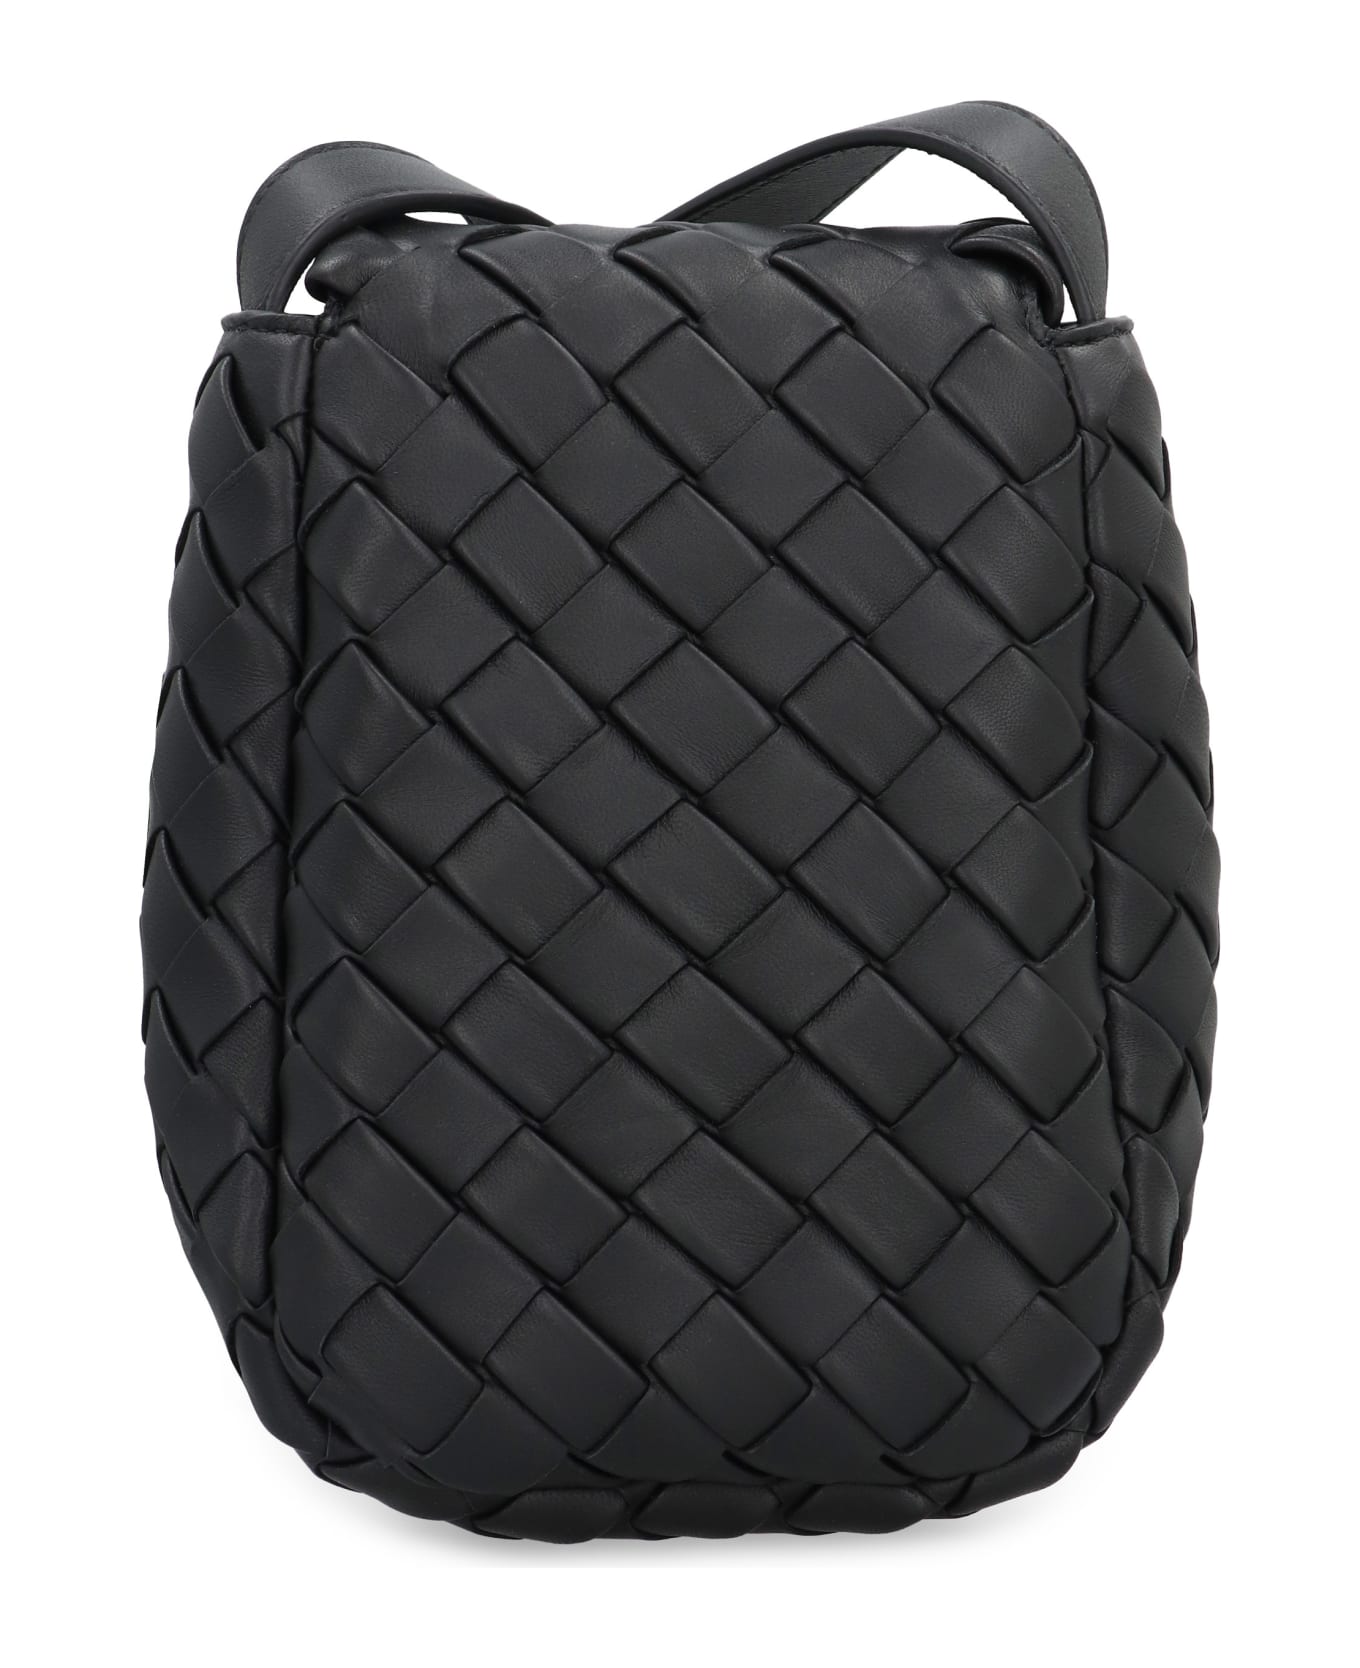 Bottega Veneta Leather Crossbody Bag - black ショルダーバッグ